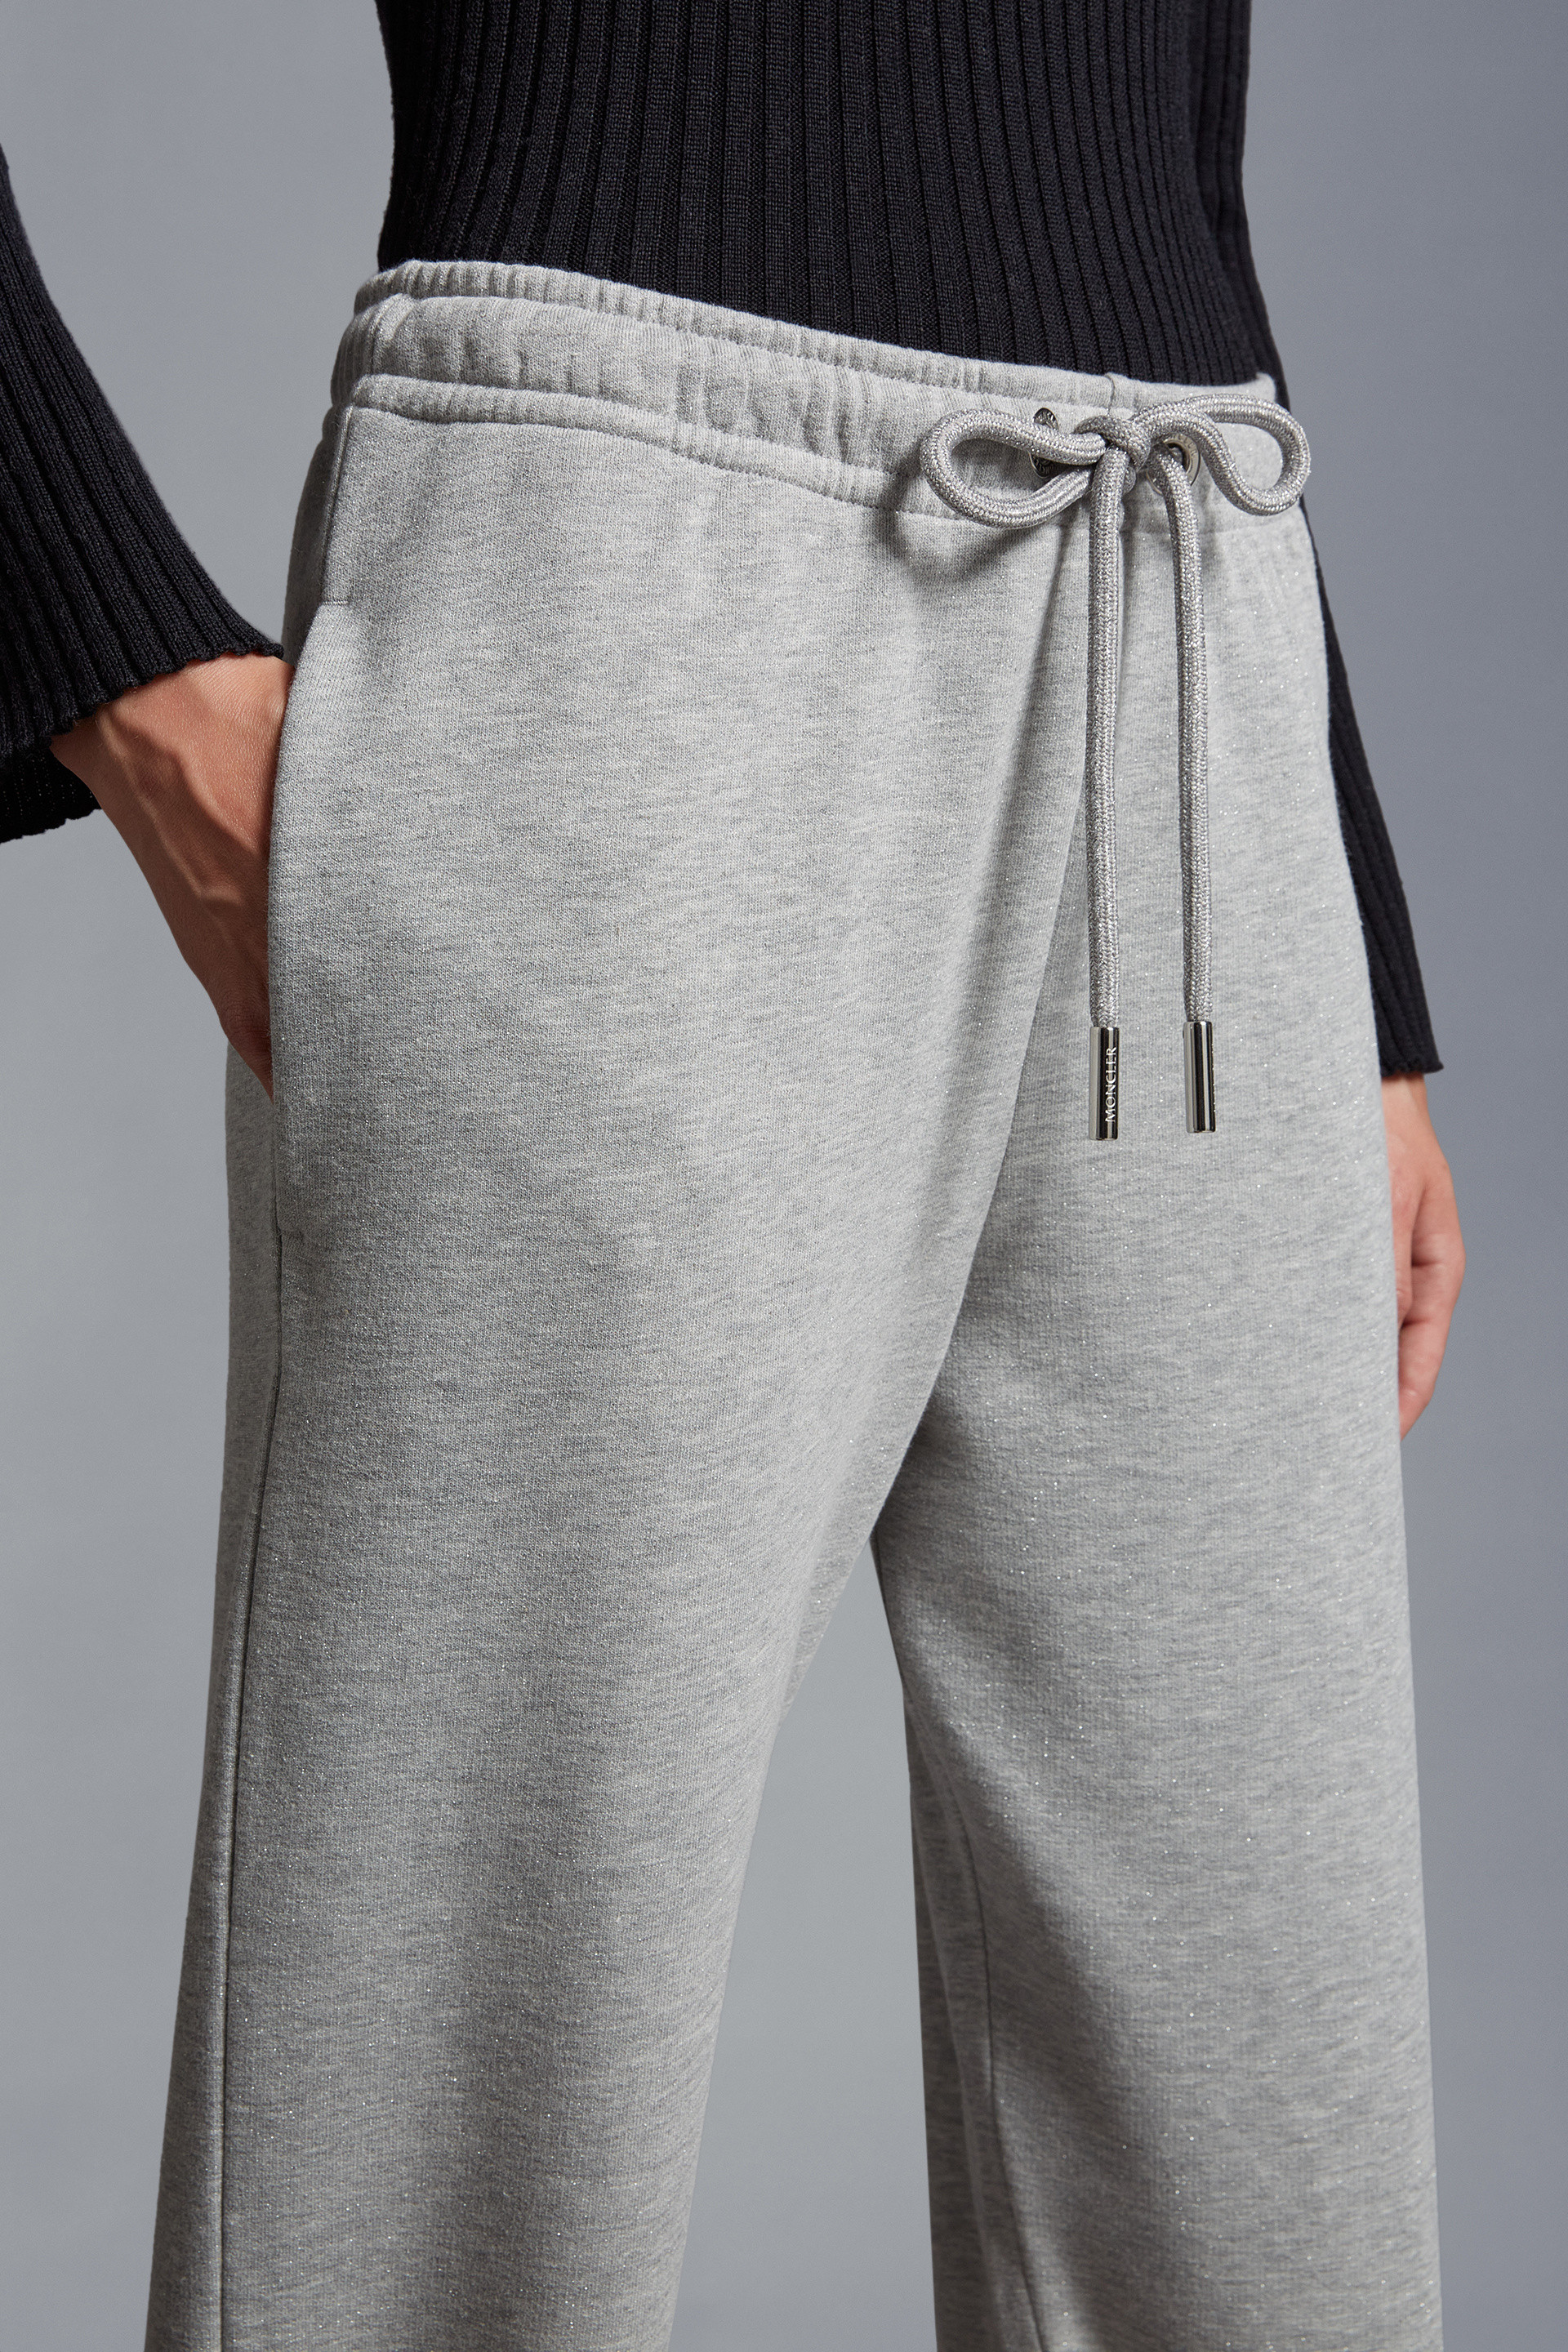 Moncler Women's Fleece Sweatpants